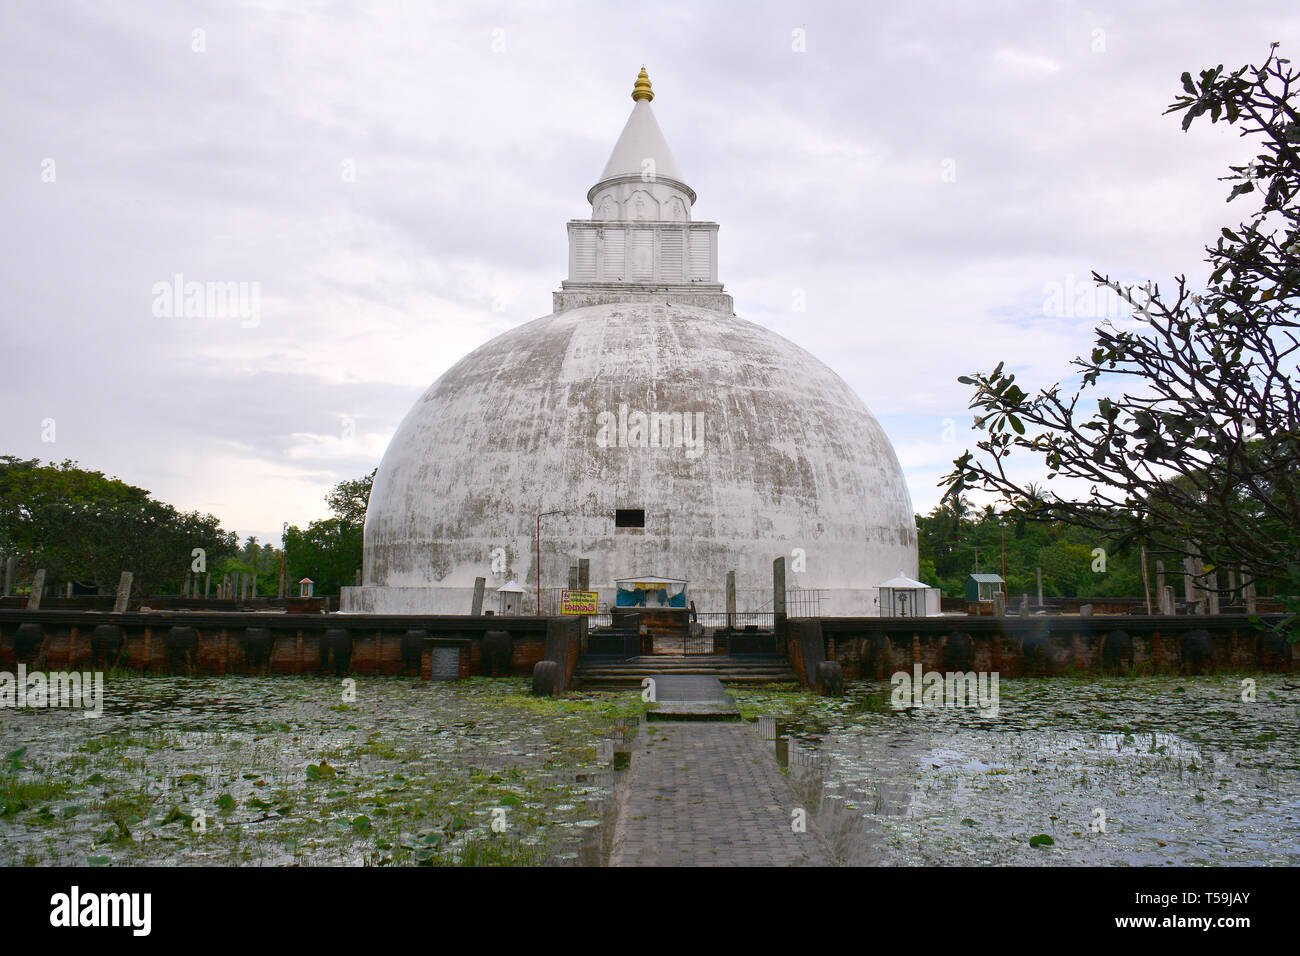 Yatala Wehera Stupa, Tissamaharama, Sri Lanka. Yatala Wehera sztupa, Tissamaharama, Srí Lanka. Stock Photo